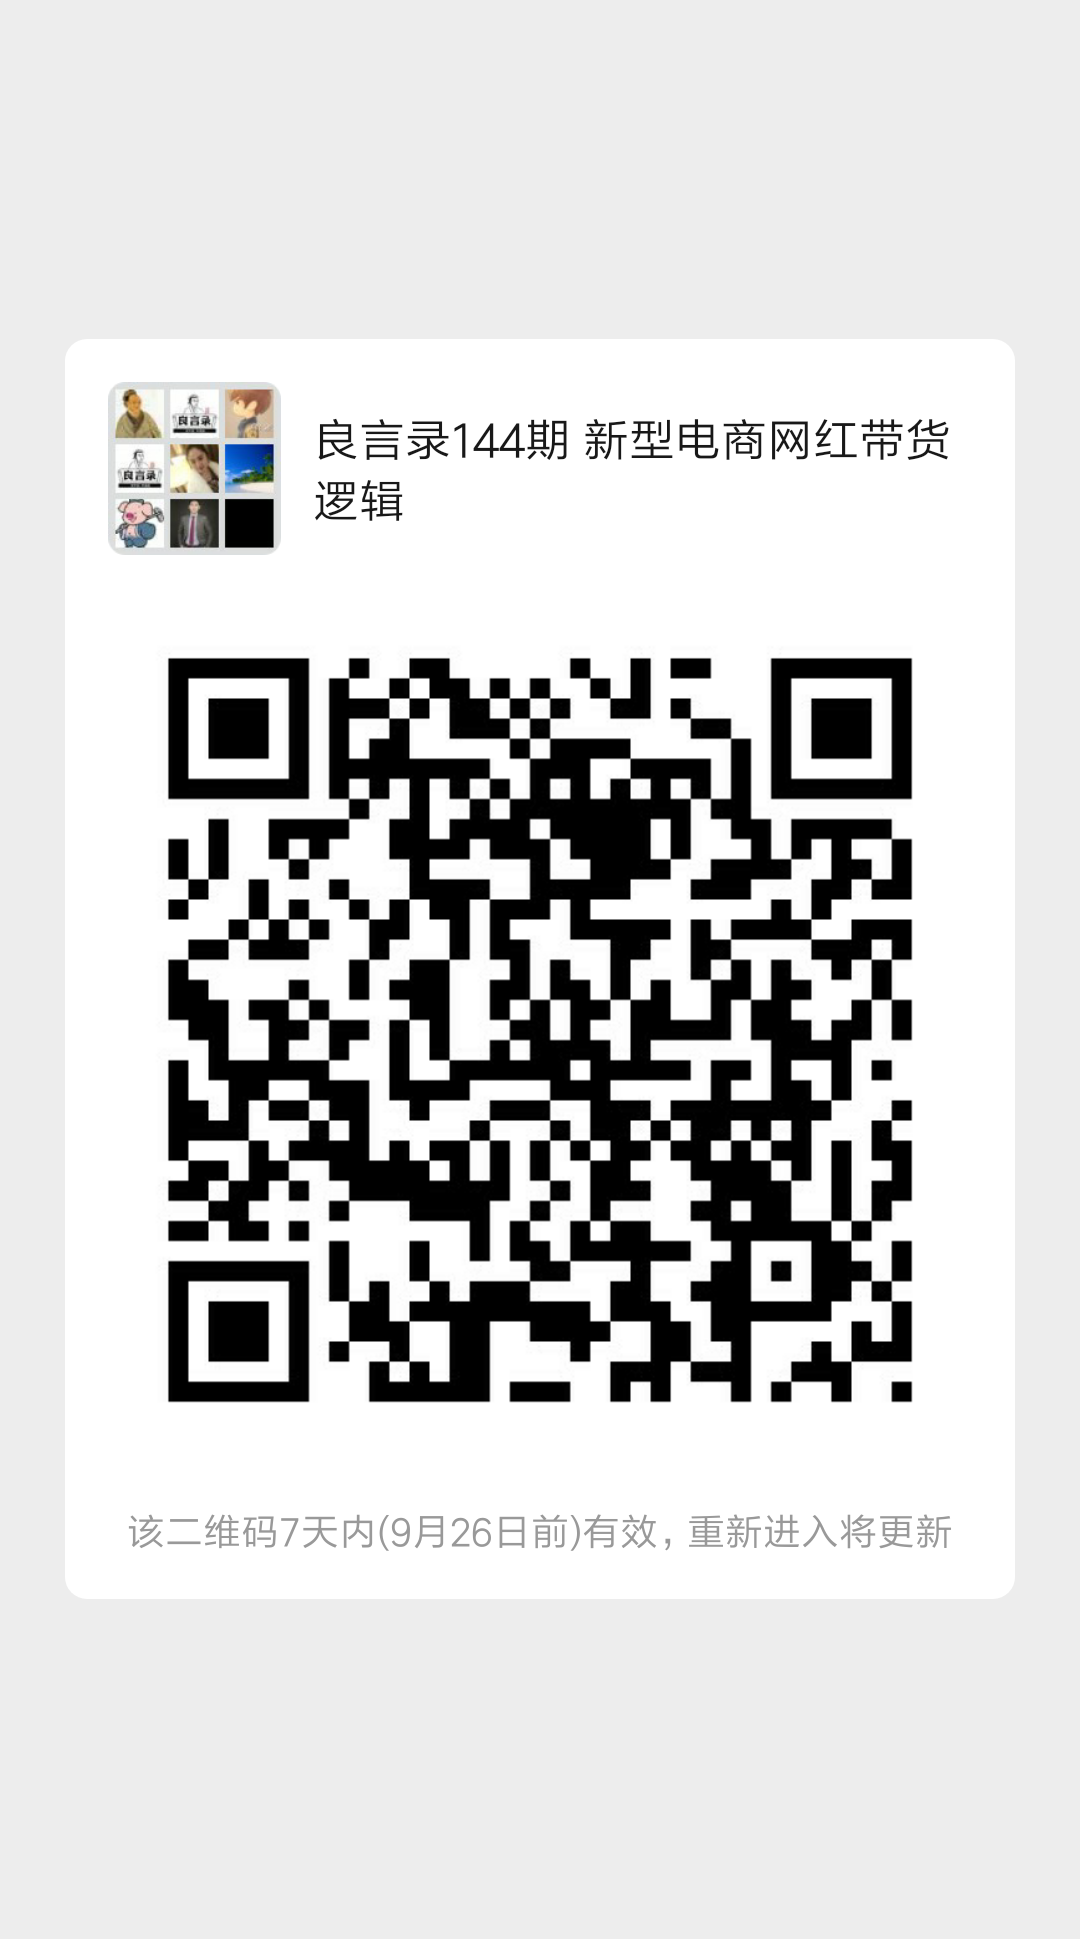 http://www.huodongxing.com/file/20151119/5622148470499/353548506668381.png